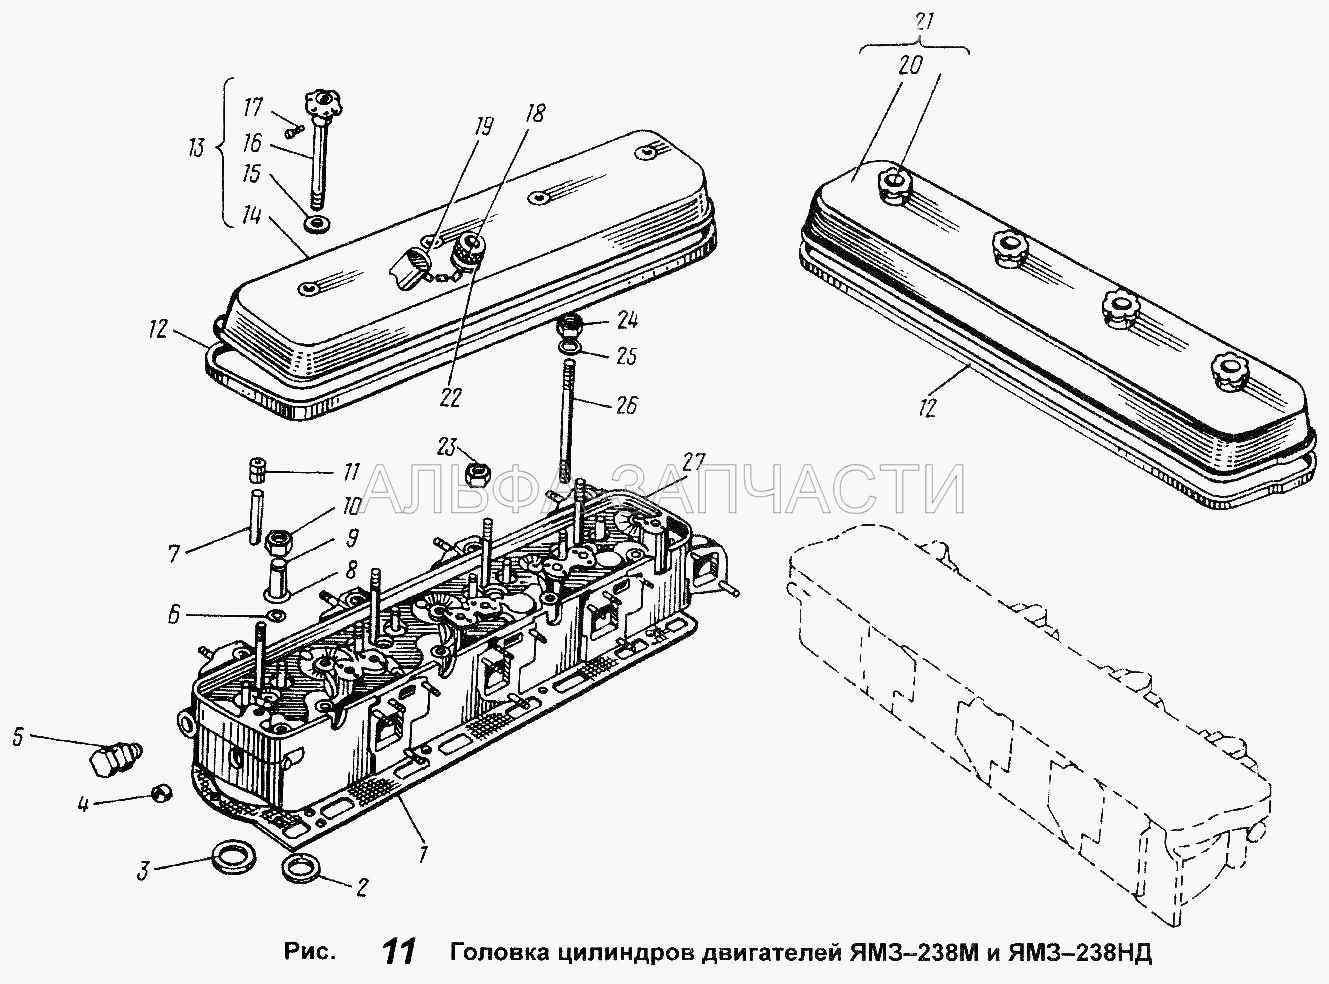 Головка цилиндров двигателей ЯМЗ-238М и ЯМЗ-238НД (311423-П5 Гайка) 